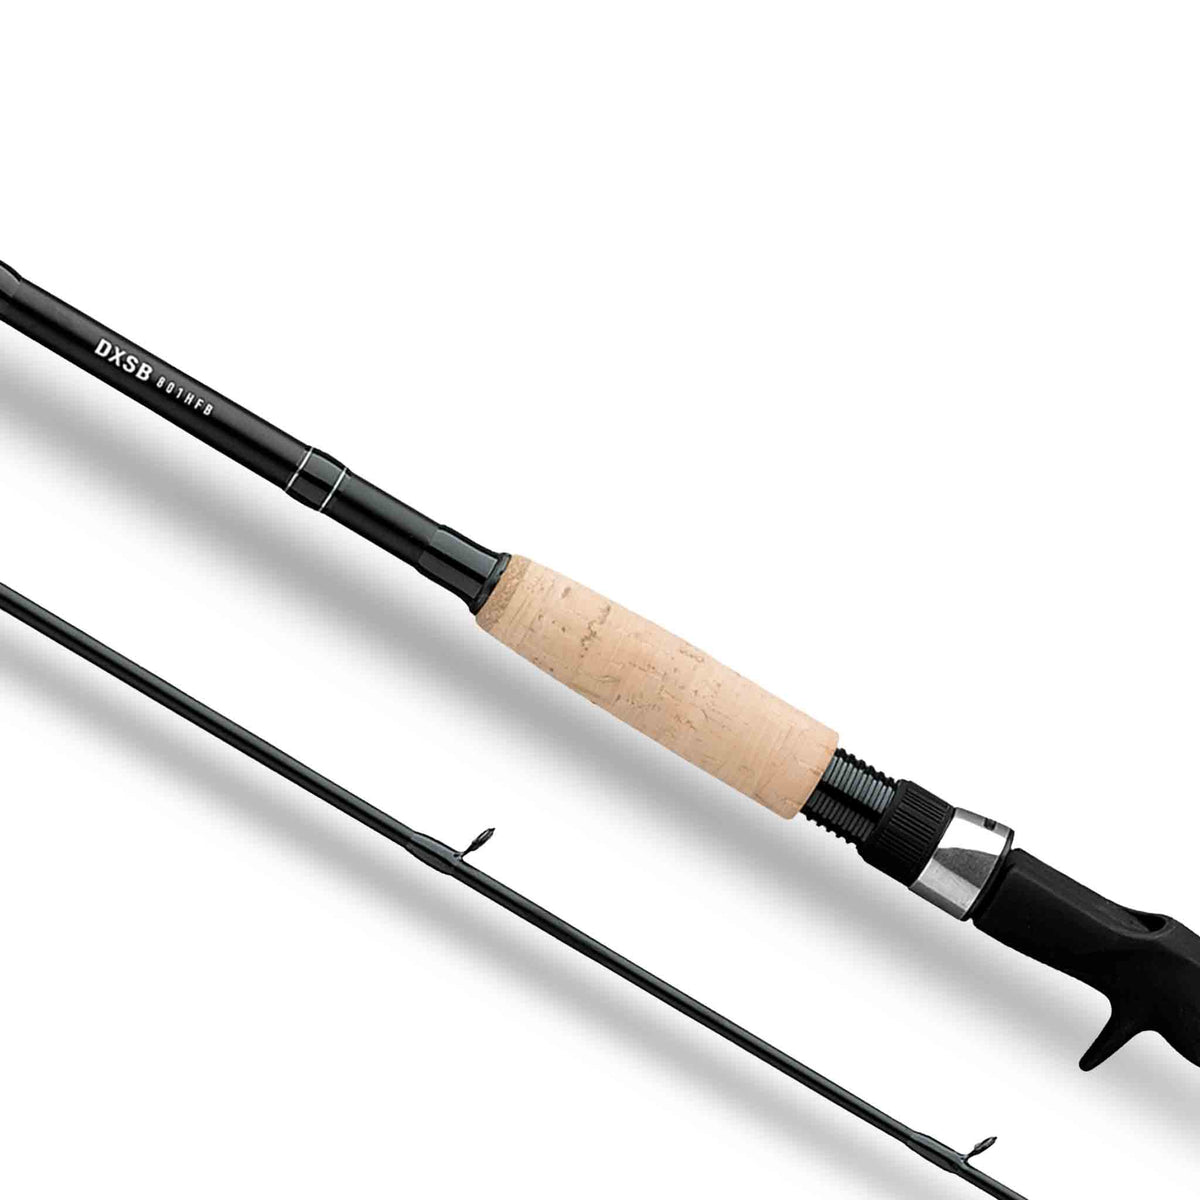 Swimbait Fishing rod review - Powell SB711H swimbait rod